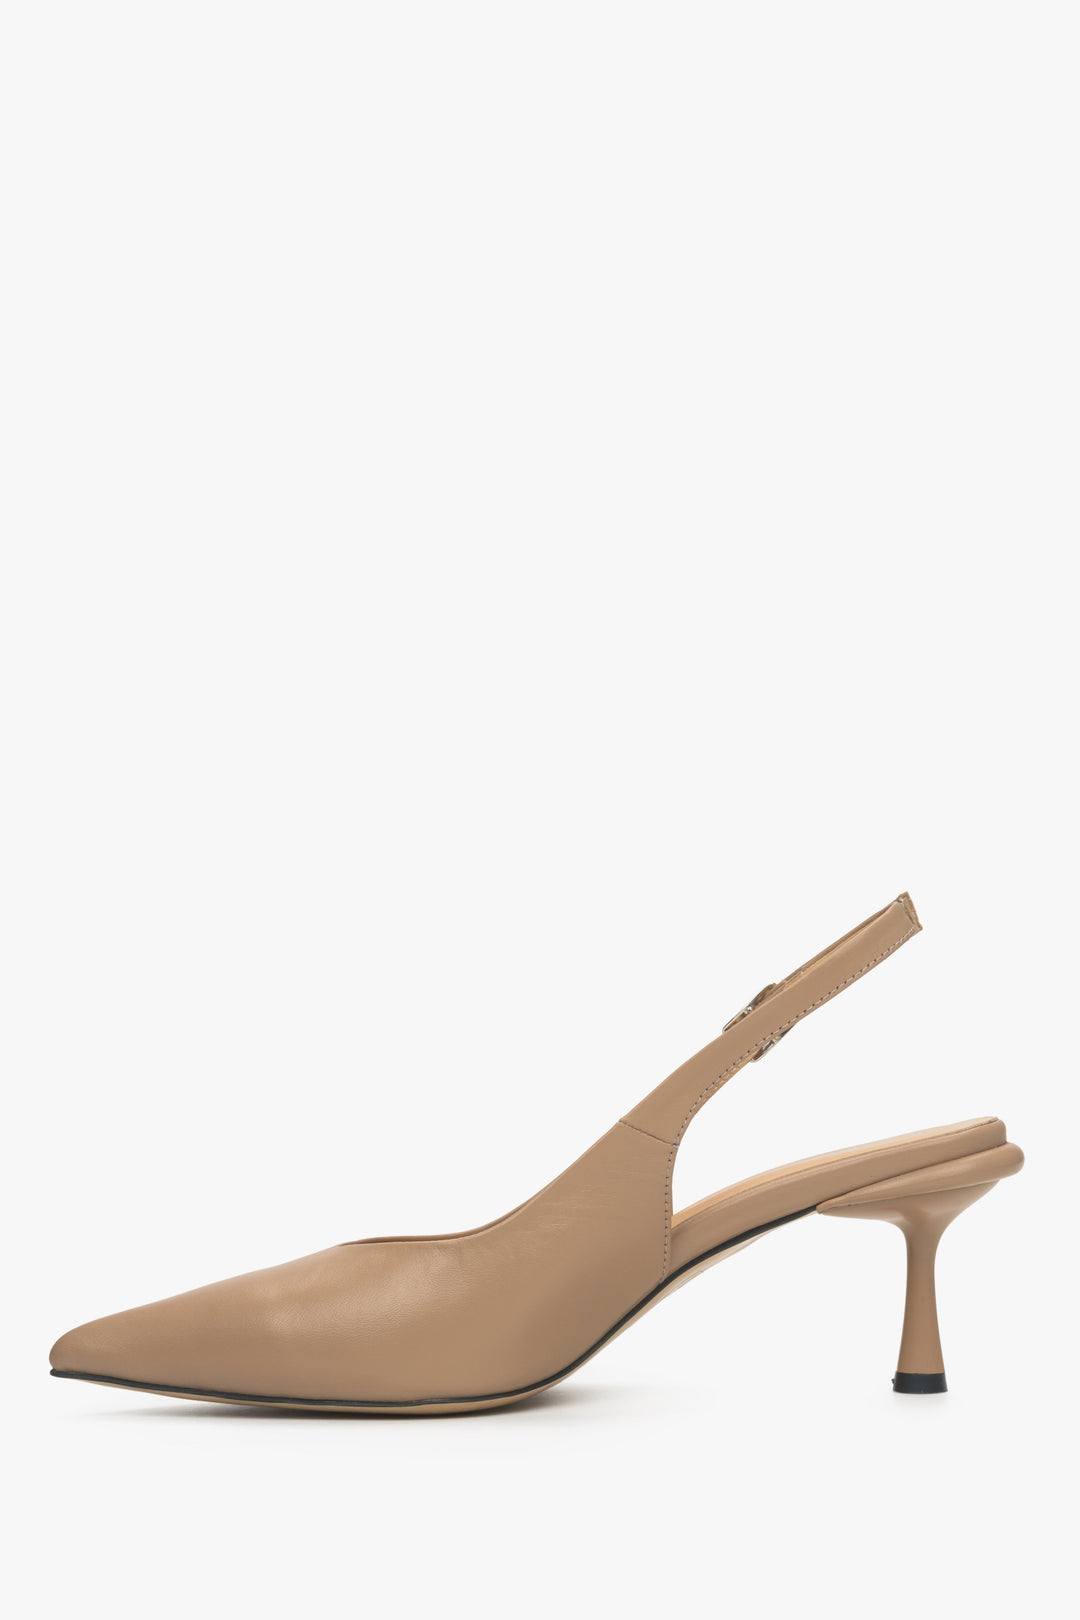 Women's beige leather slingback shoes by Estro - shoe profile.